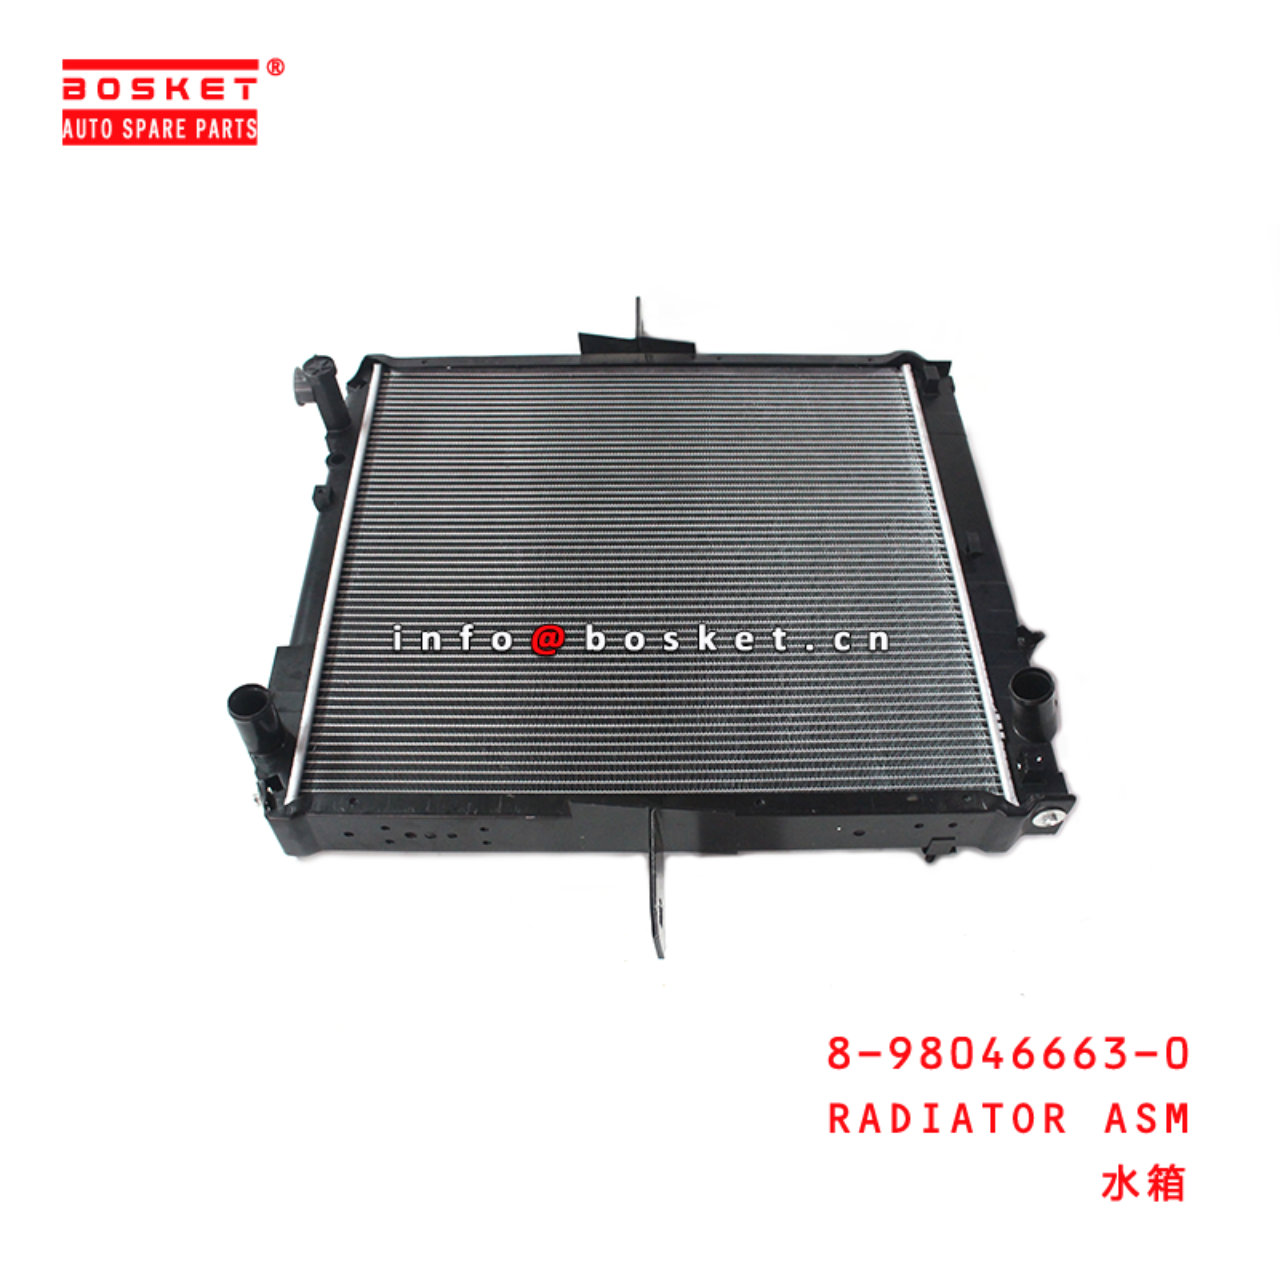 8-98046663-0 Radiator Assembly 8980466630 Suitable for ISUZU NPR 